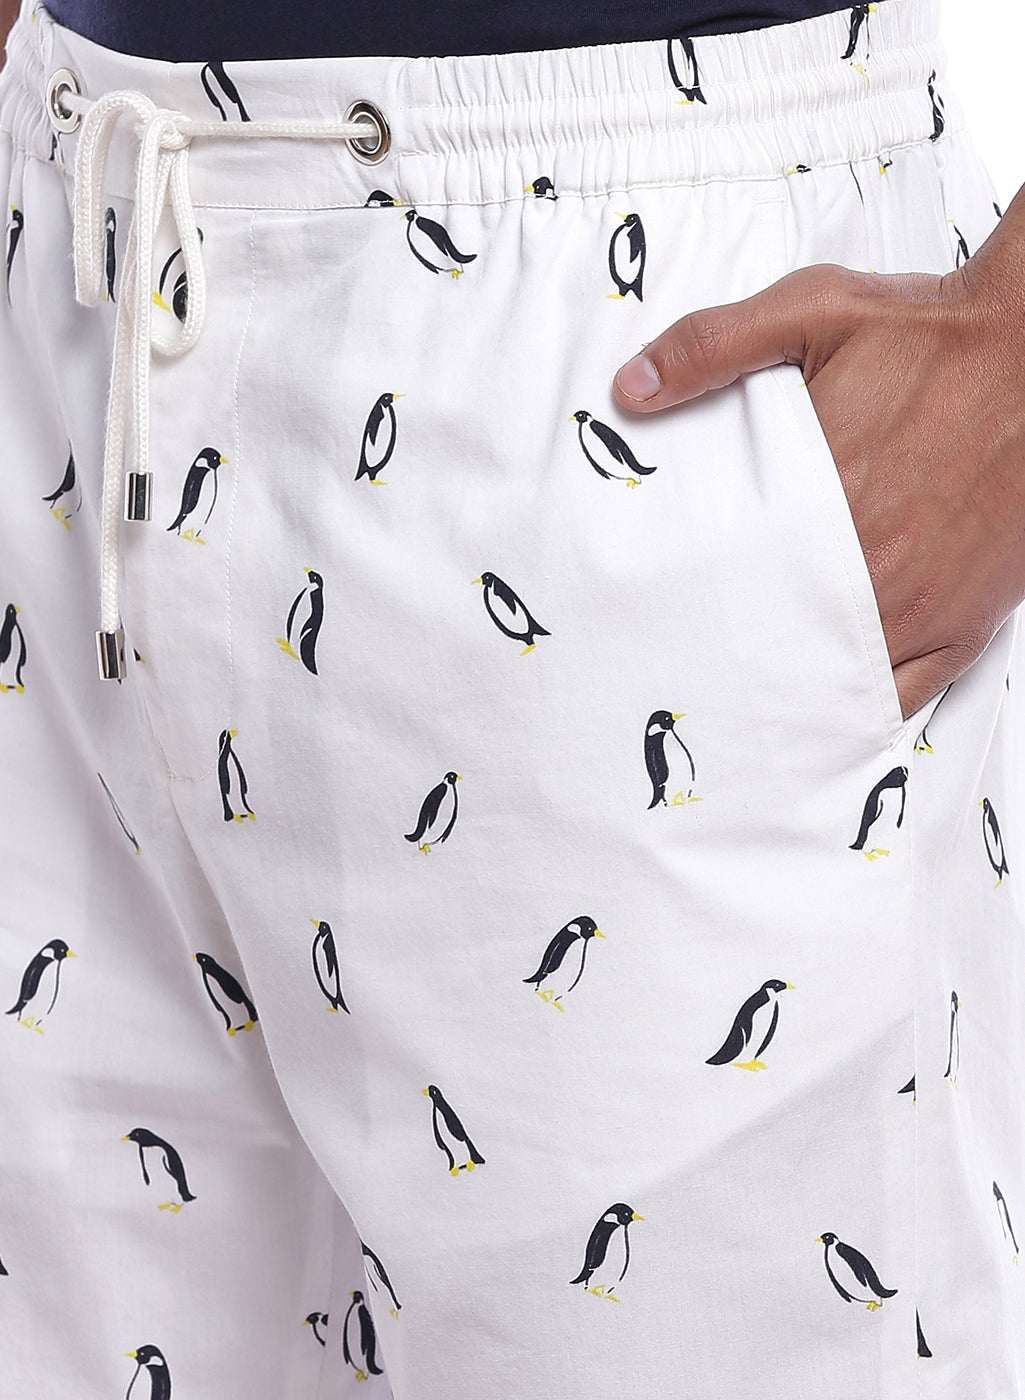 Penguin Print Shorts - Genes online store 2020